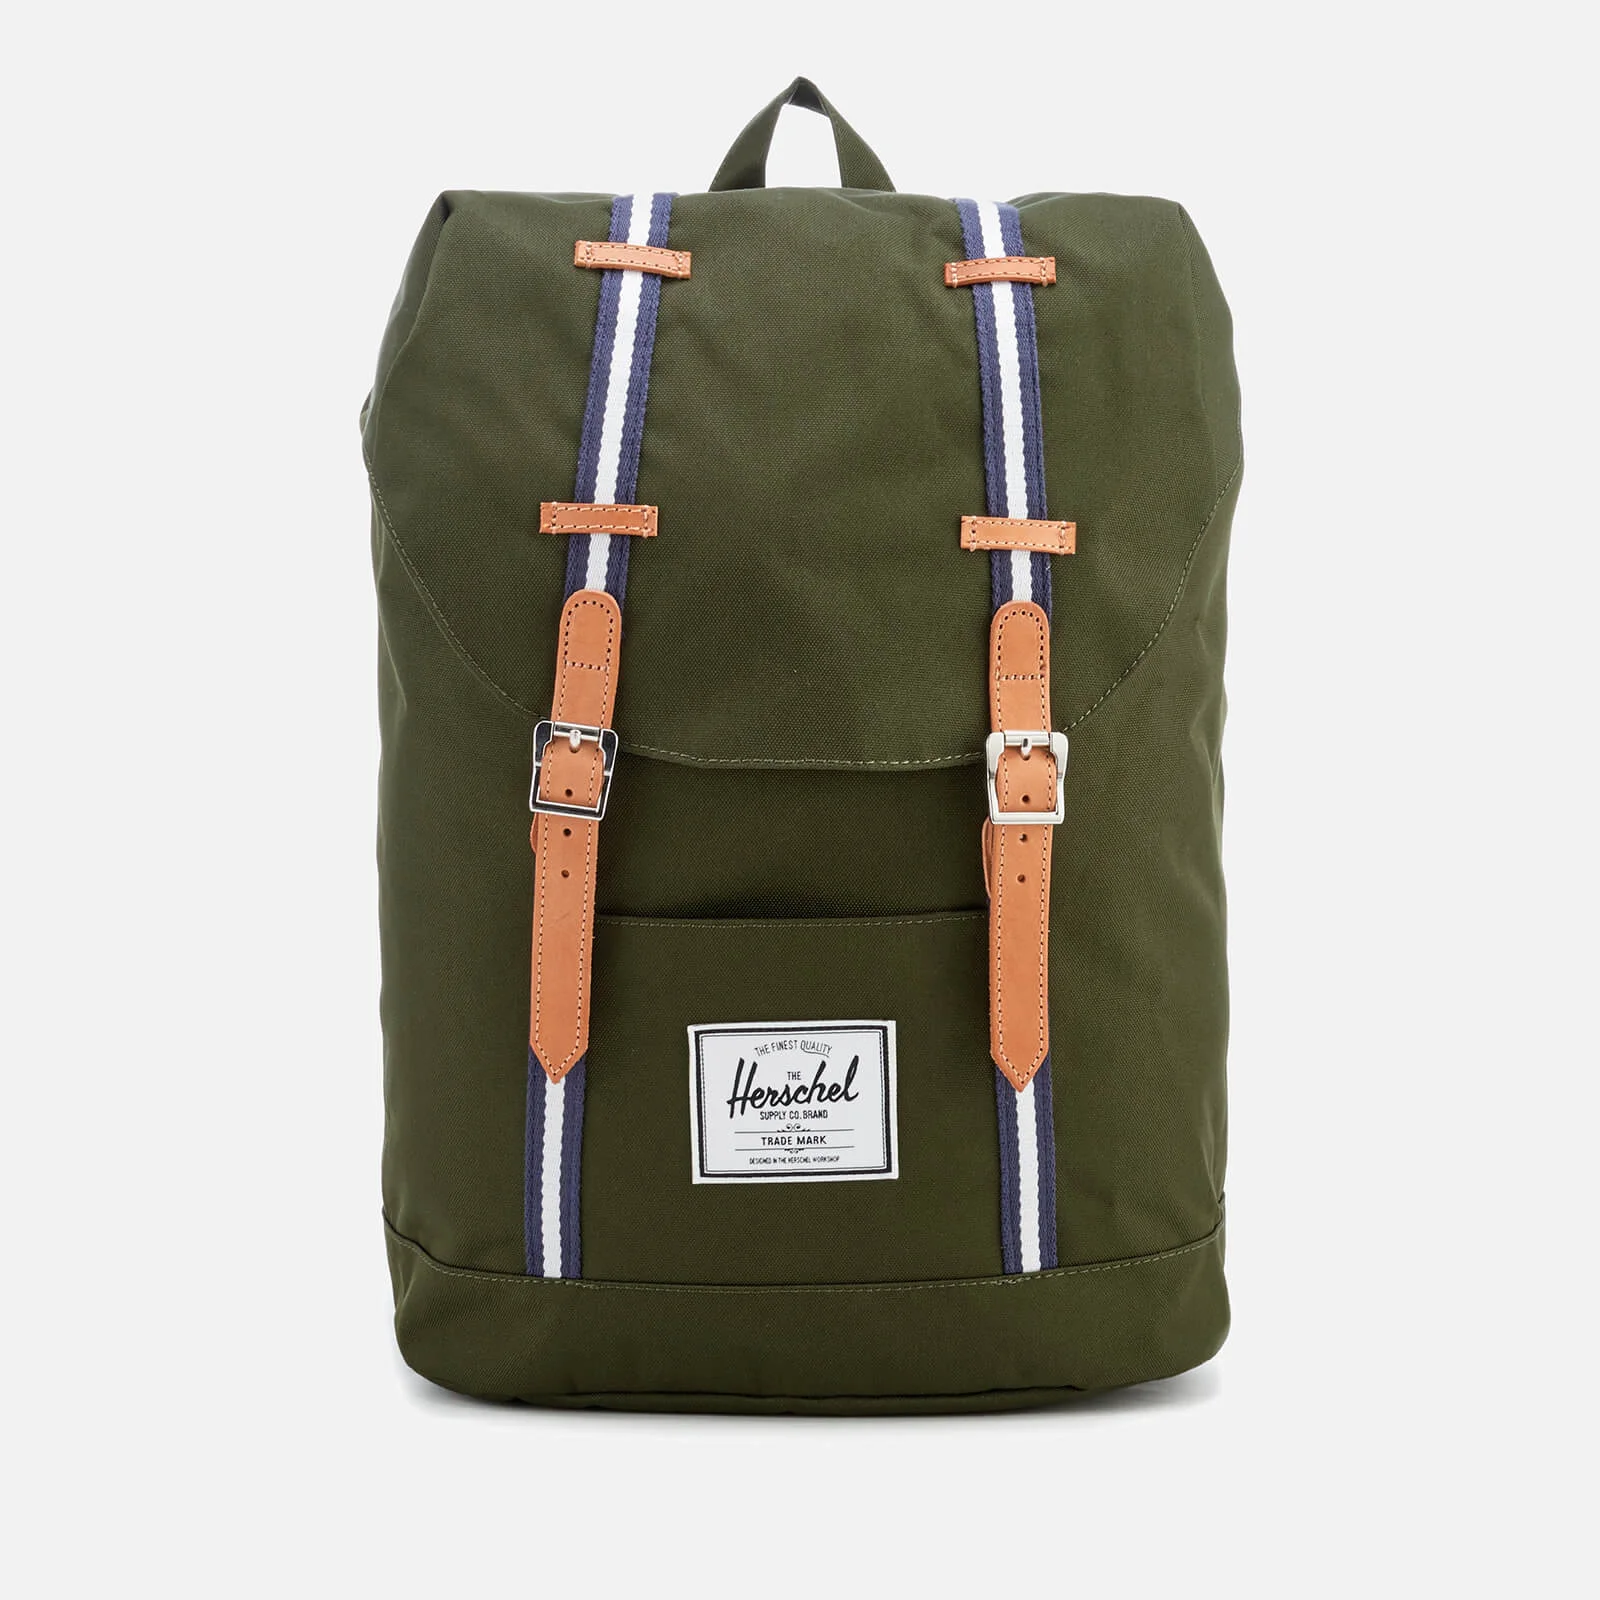 Herschel Supply Co. Men's Retreat Backpack - Forest Green/Veggie Tan Leather Image 1